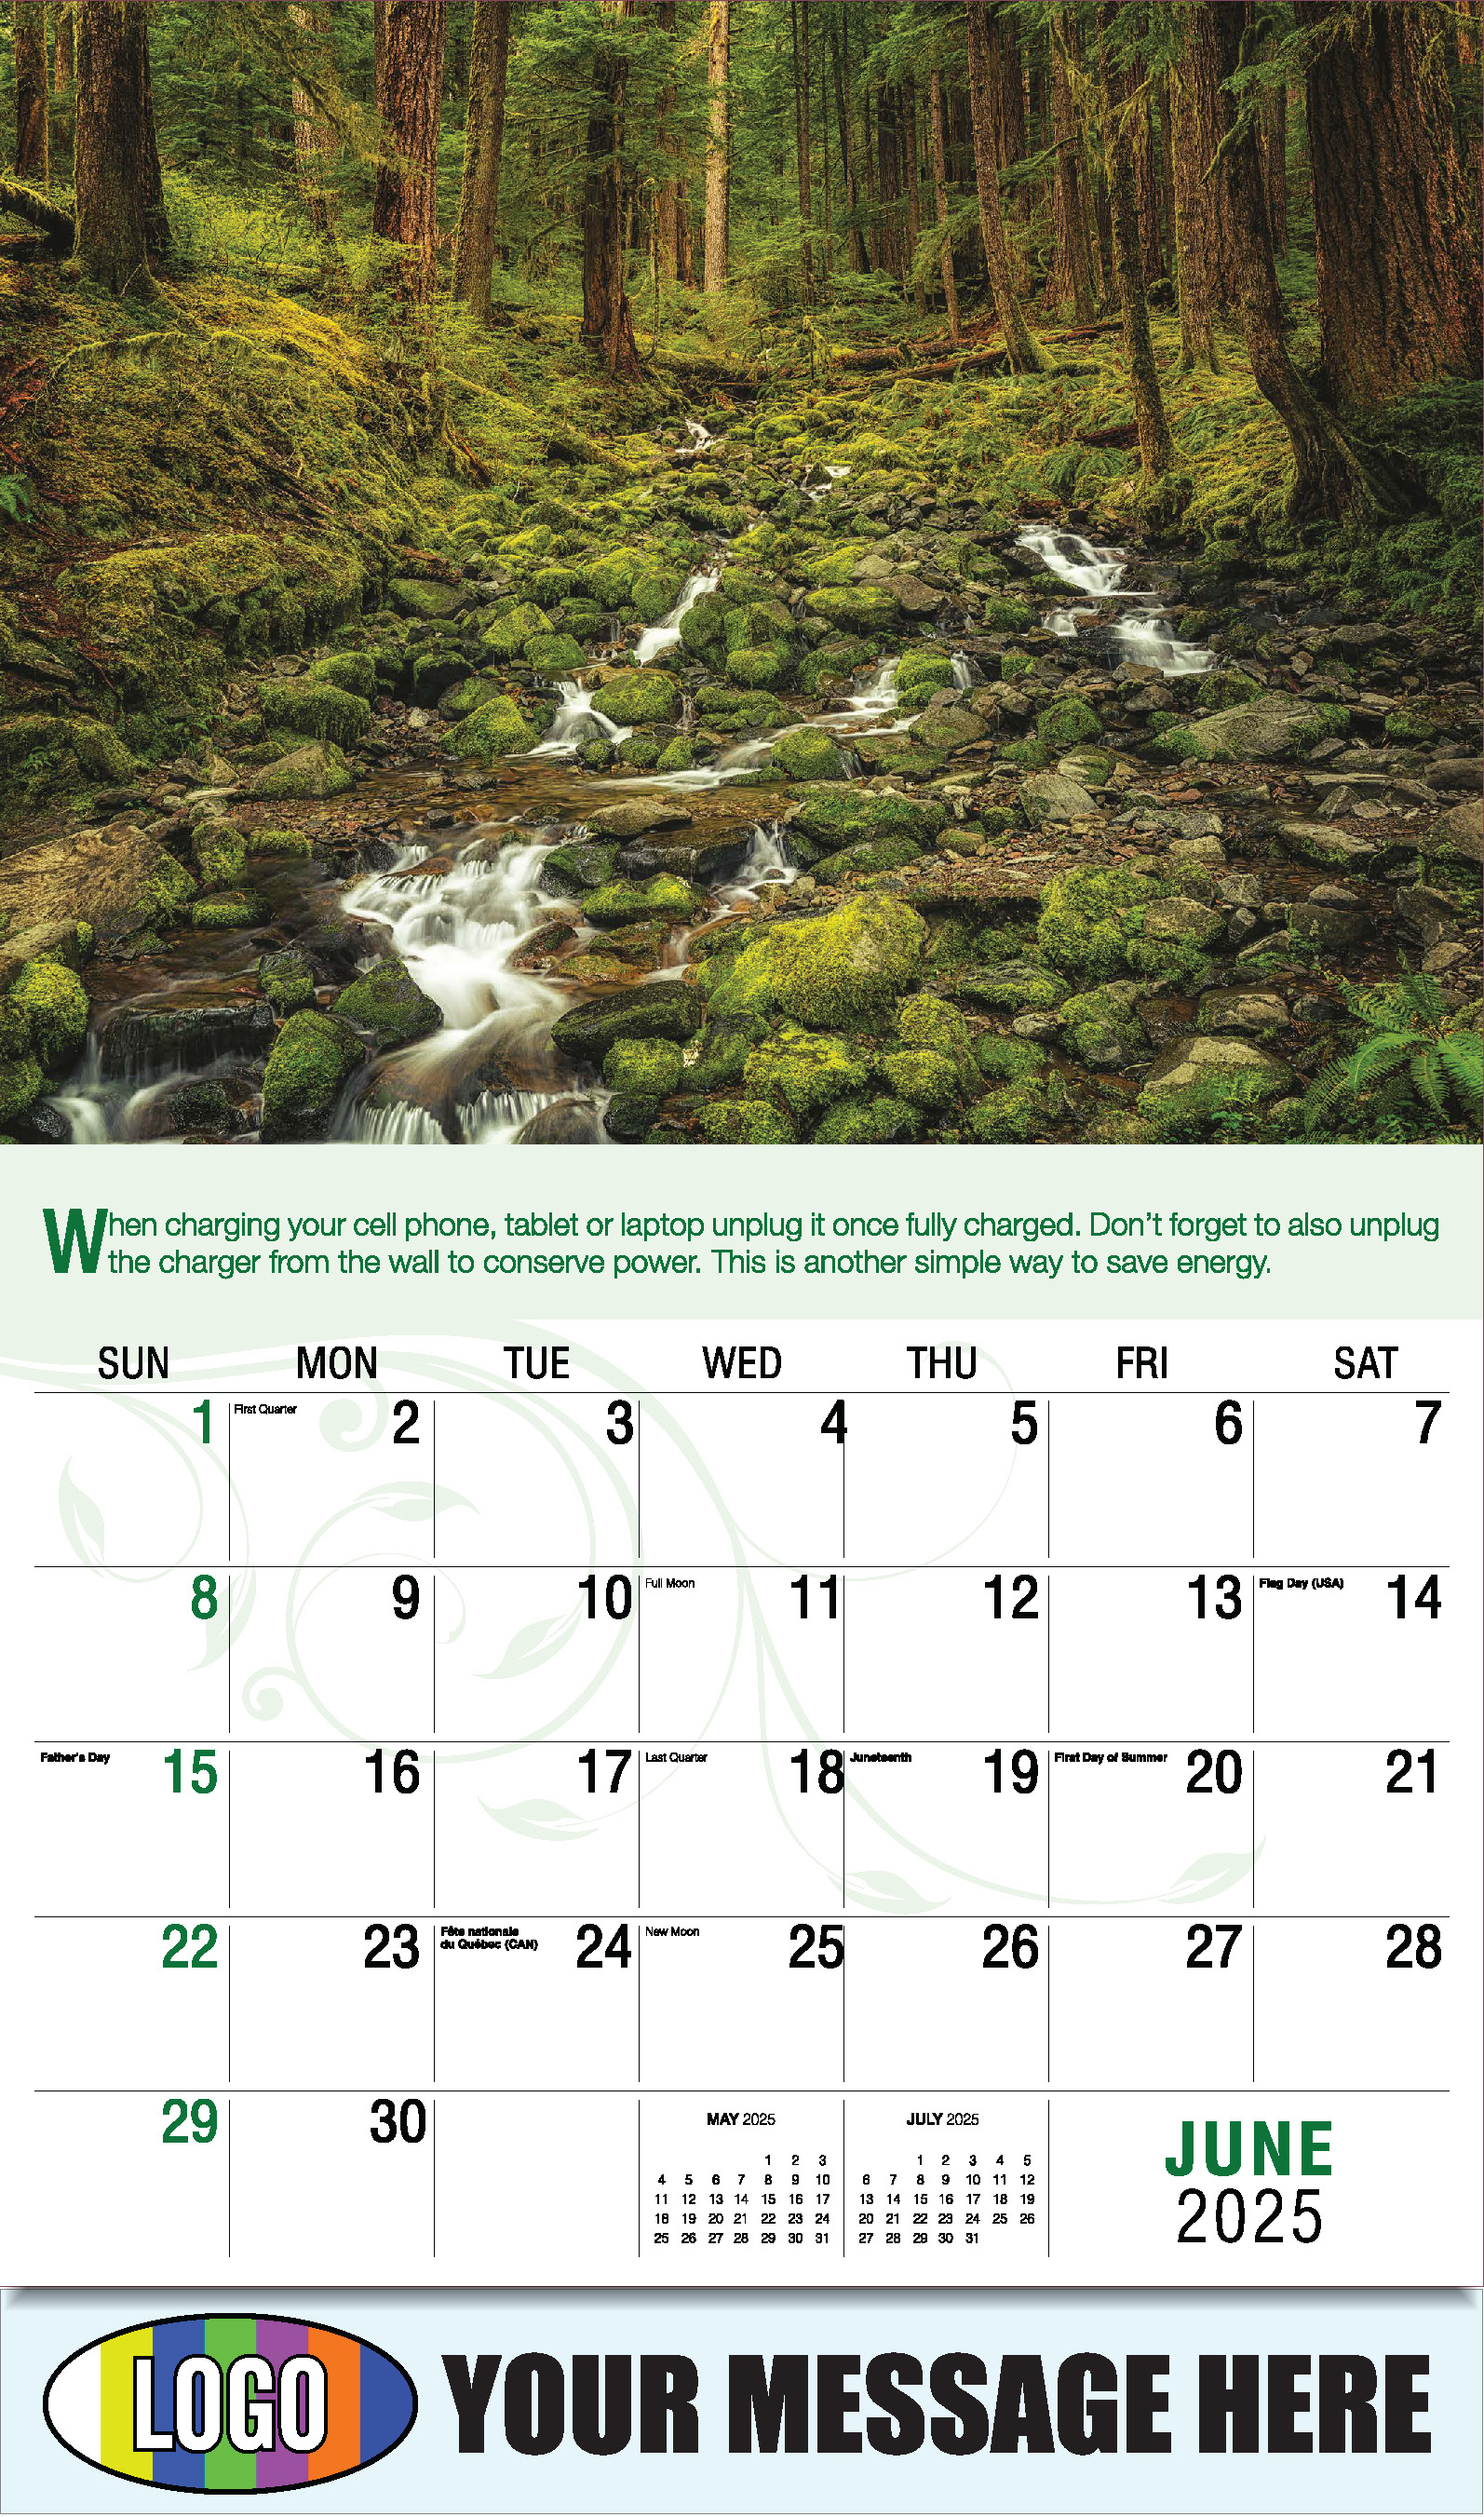 Go Green 2025 Business Promotion Calendar - June